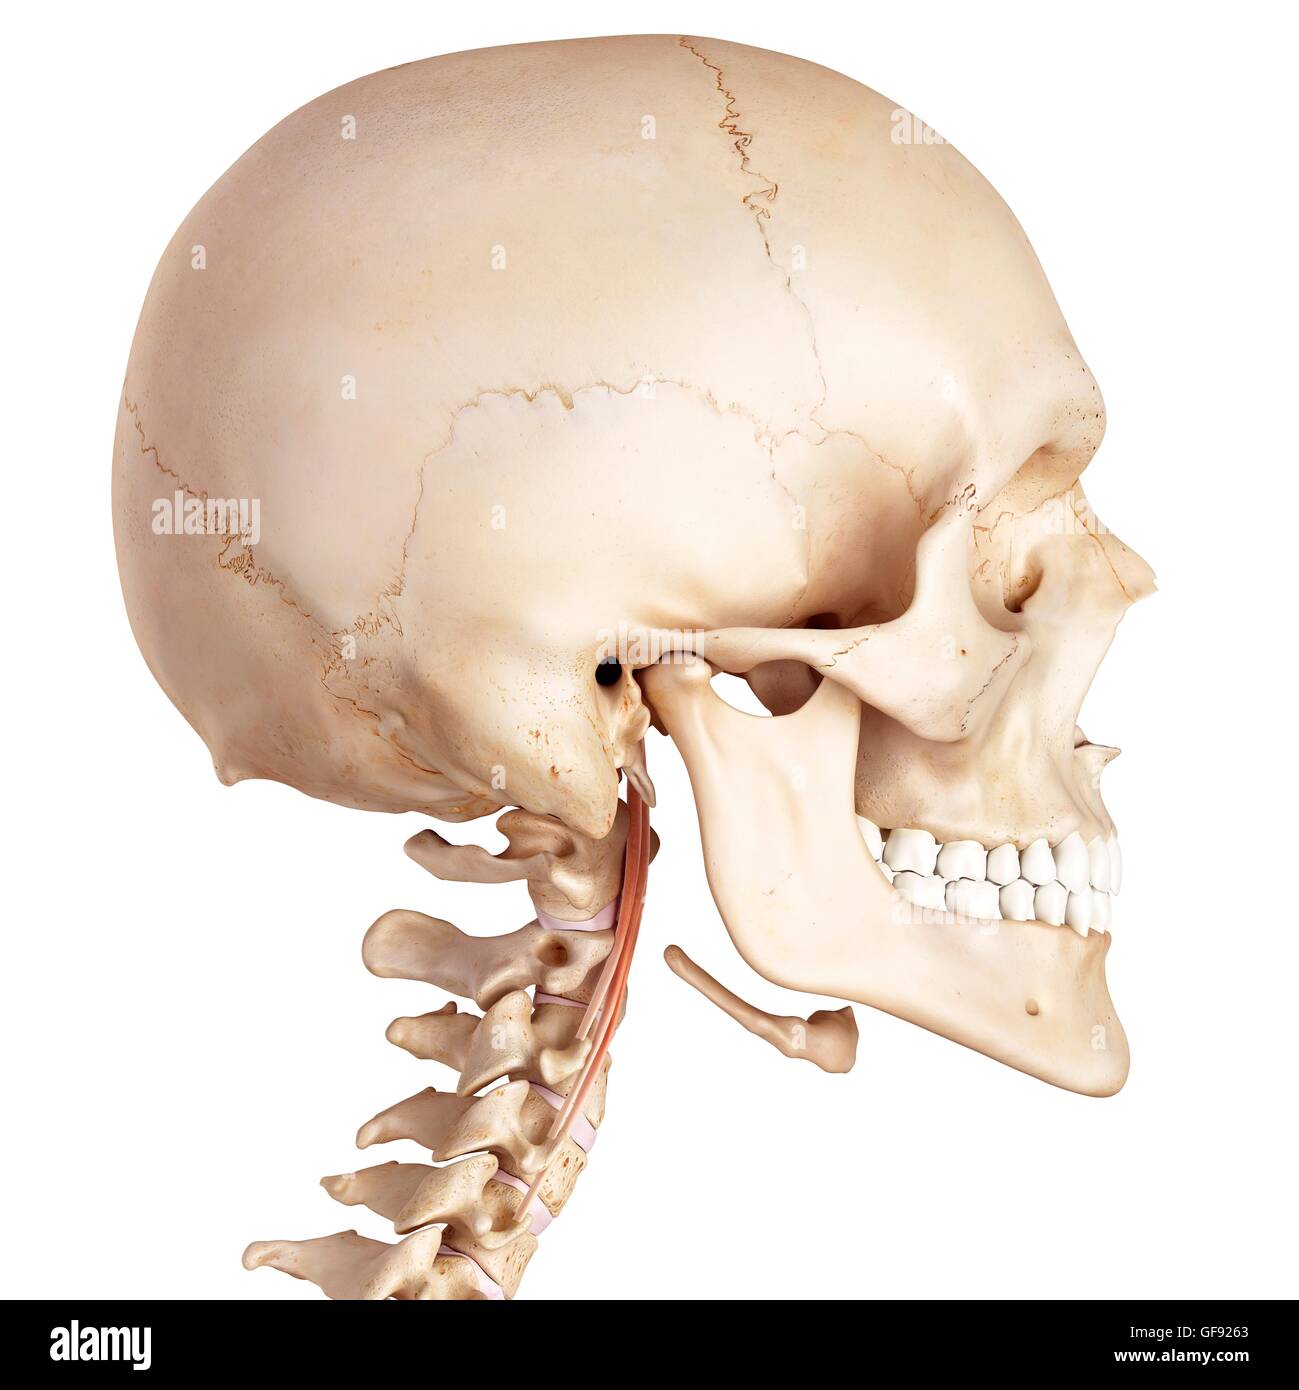 Human neck muscles, illustration. Stock Photo